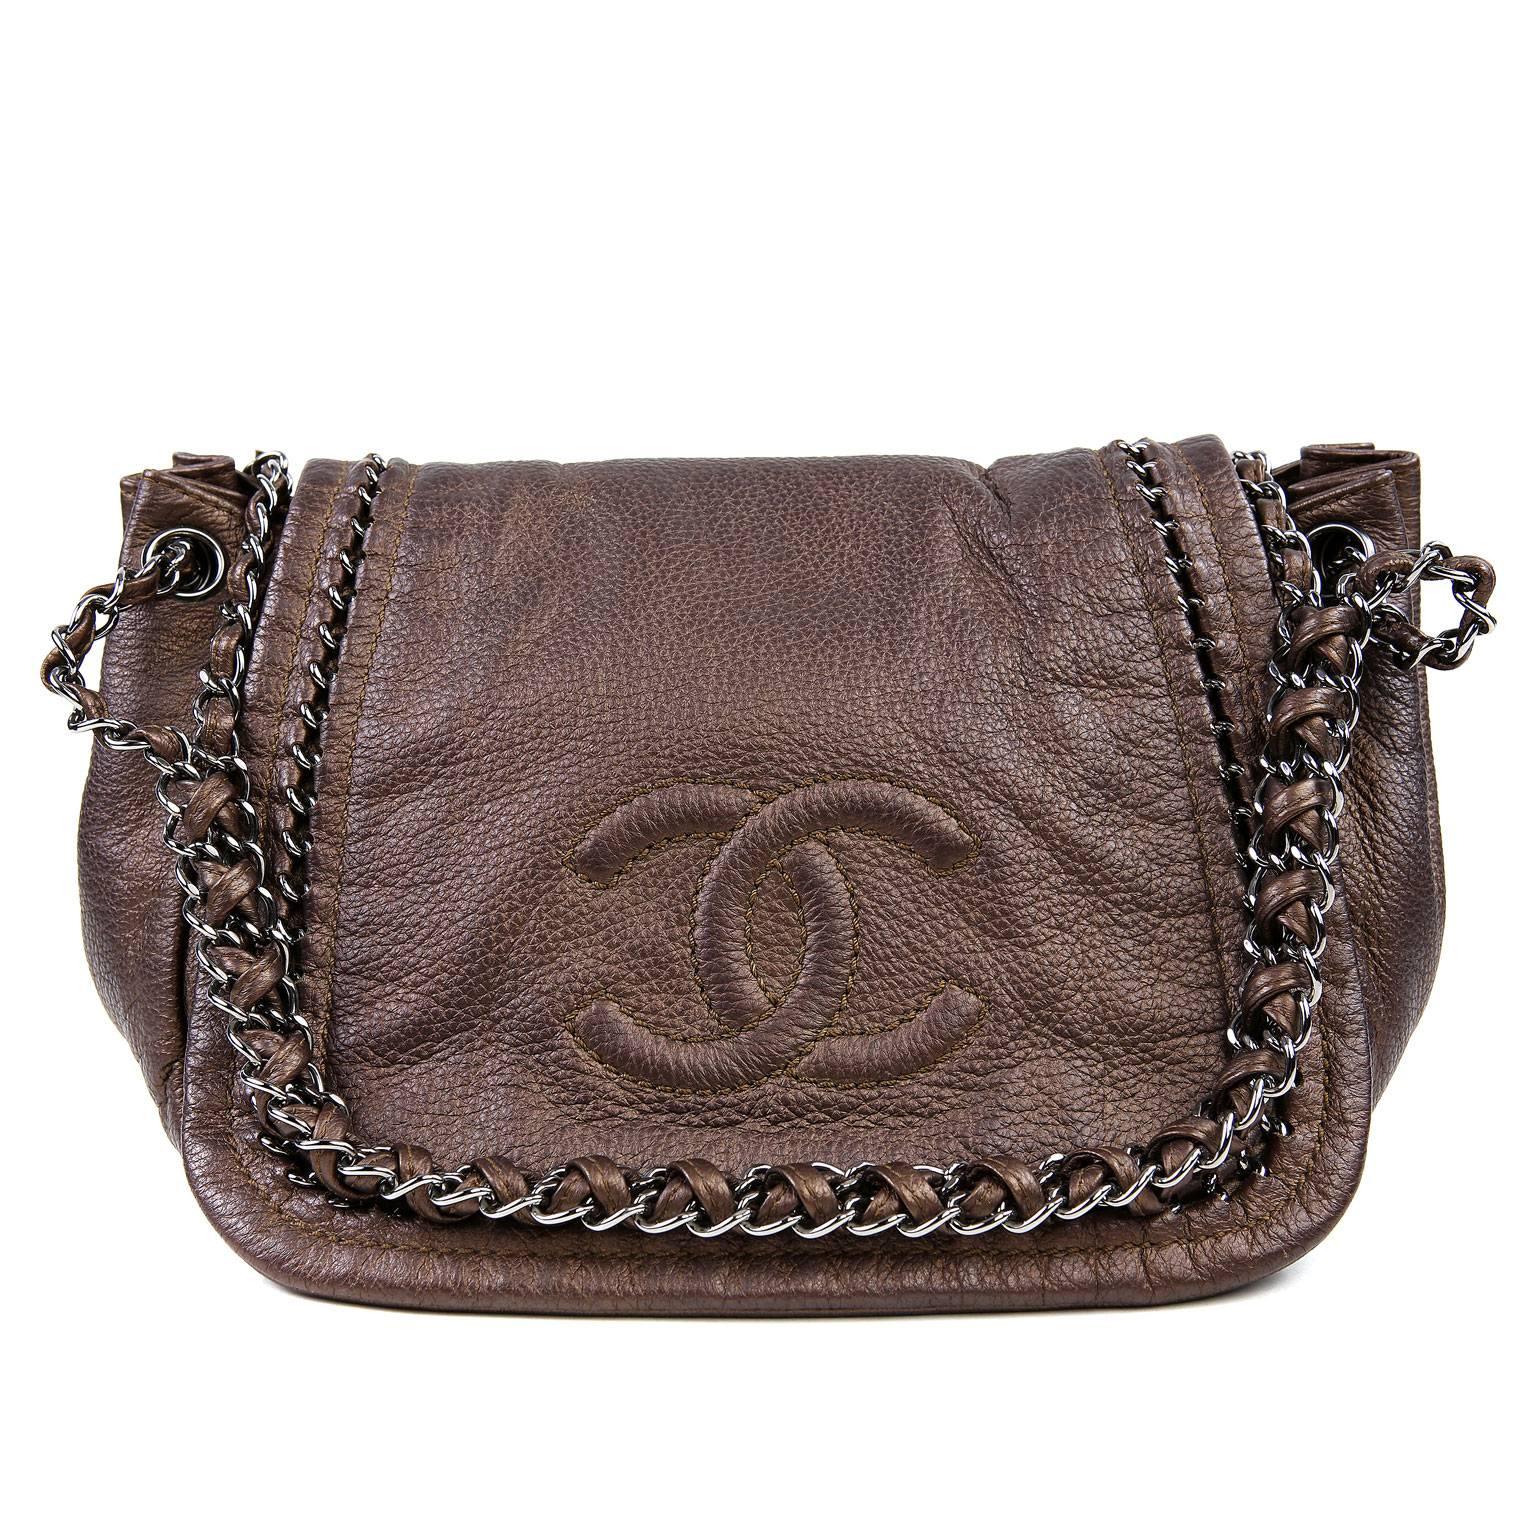 Chanel Copper Leather Accordion Messenger Flap Bag